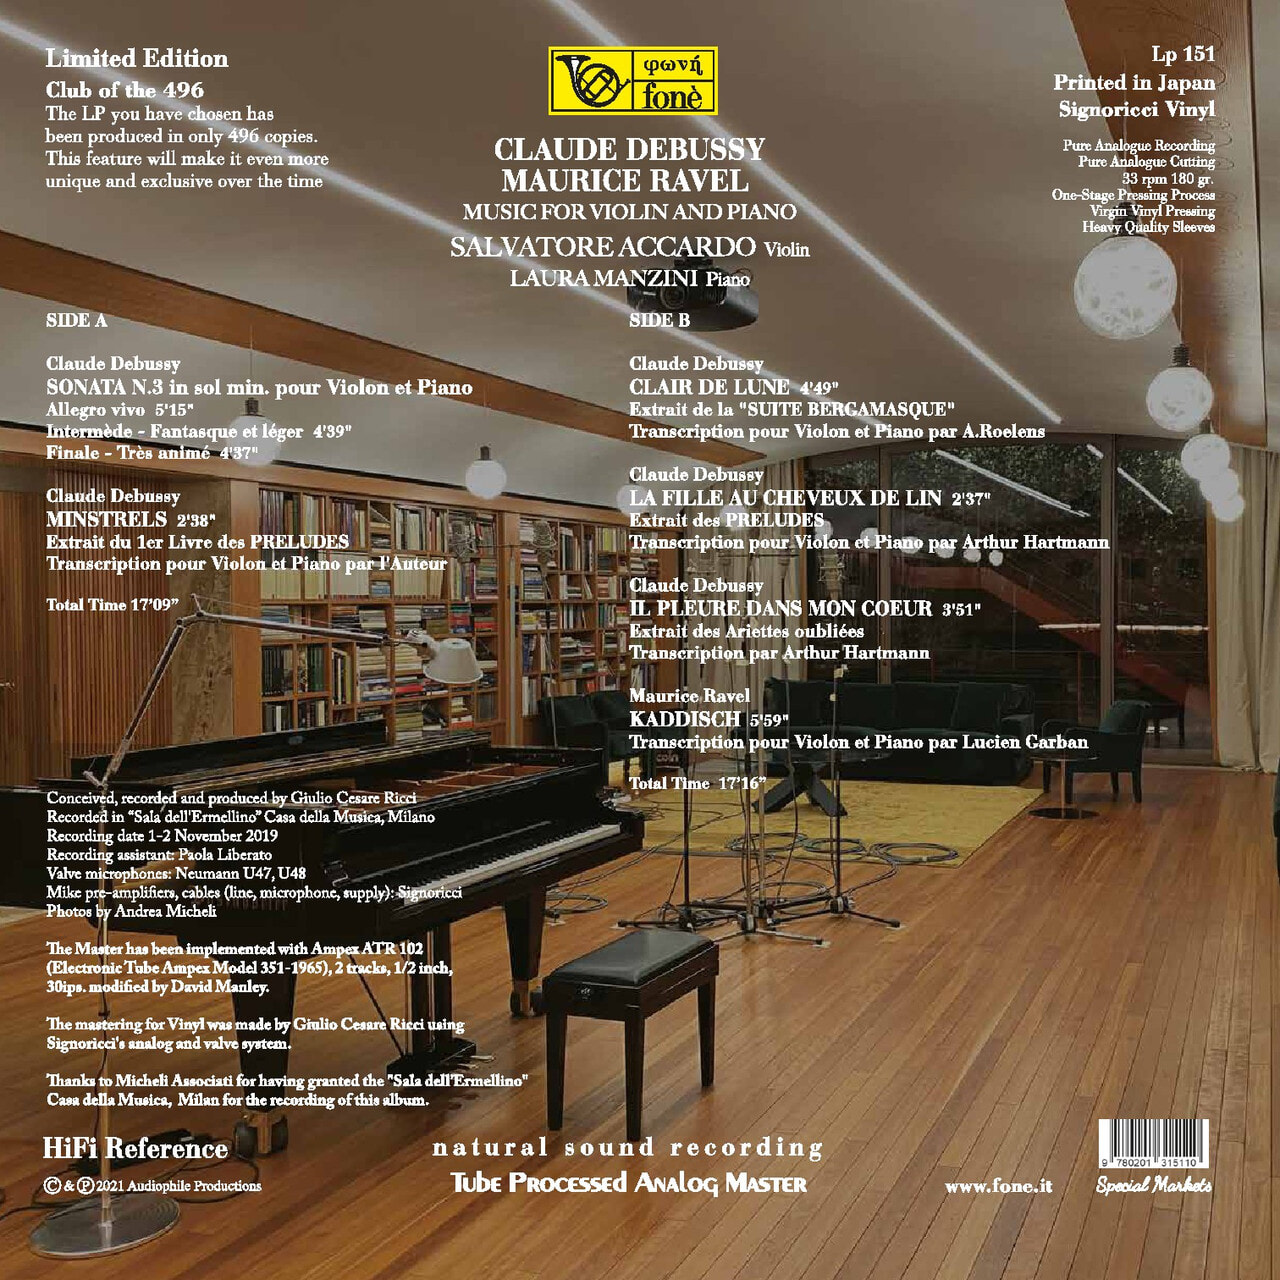 Salvatore Accardo 드뷔시 / 라벨: 바이올린과 피아노를 위한 음악 - 살바토레 아카르도 [투명 컬러 LP]